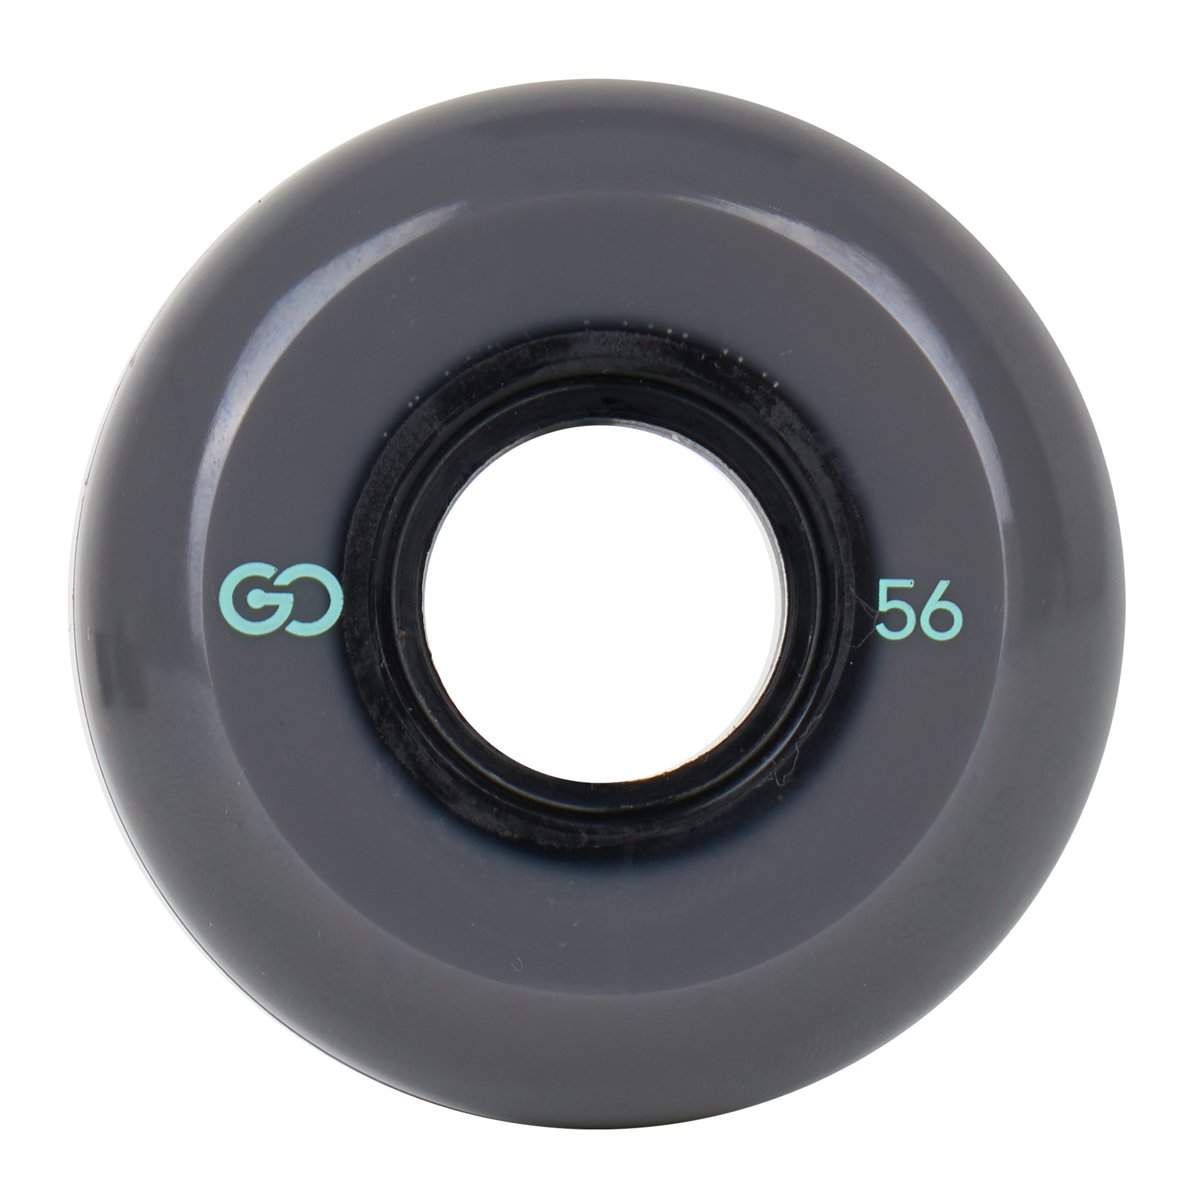 Go Project Wheel - Eliptical Shape - 56mm